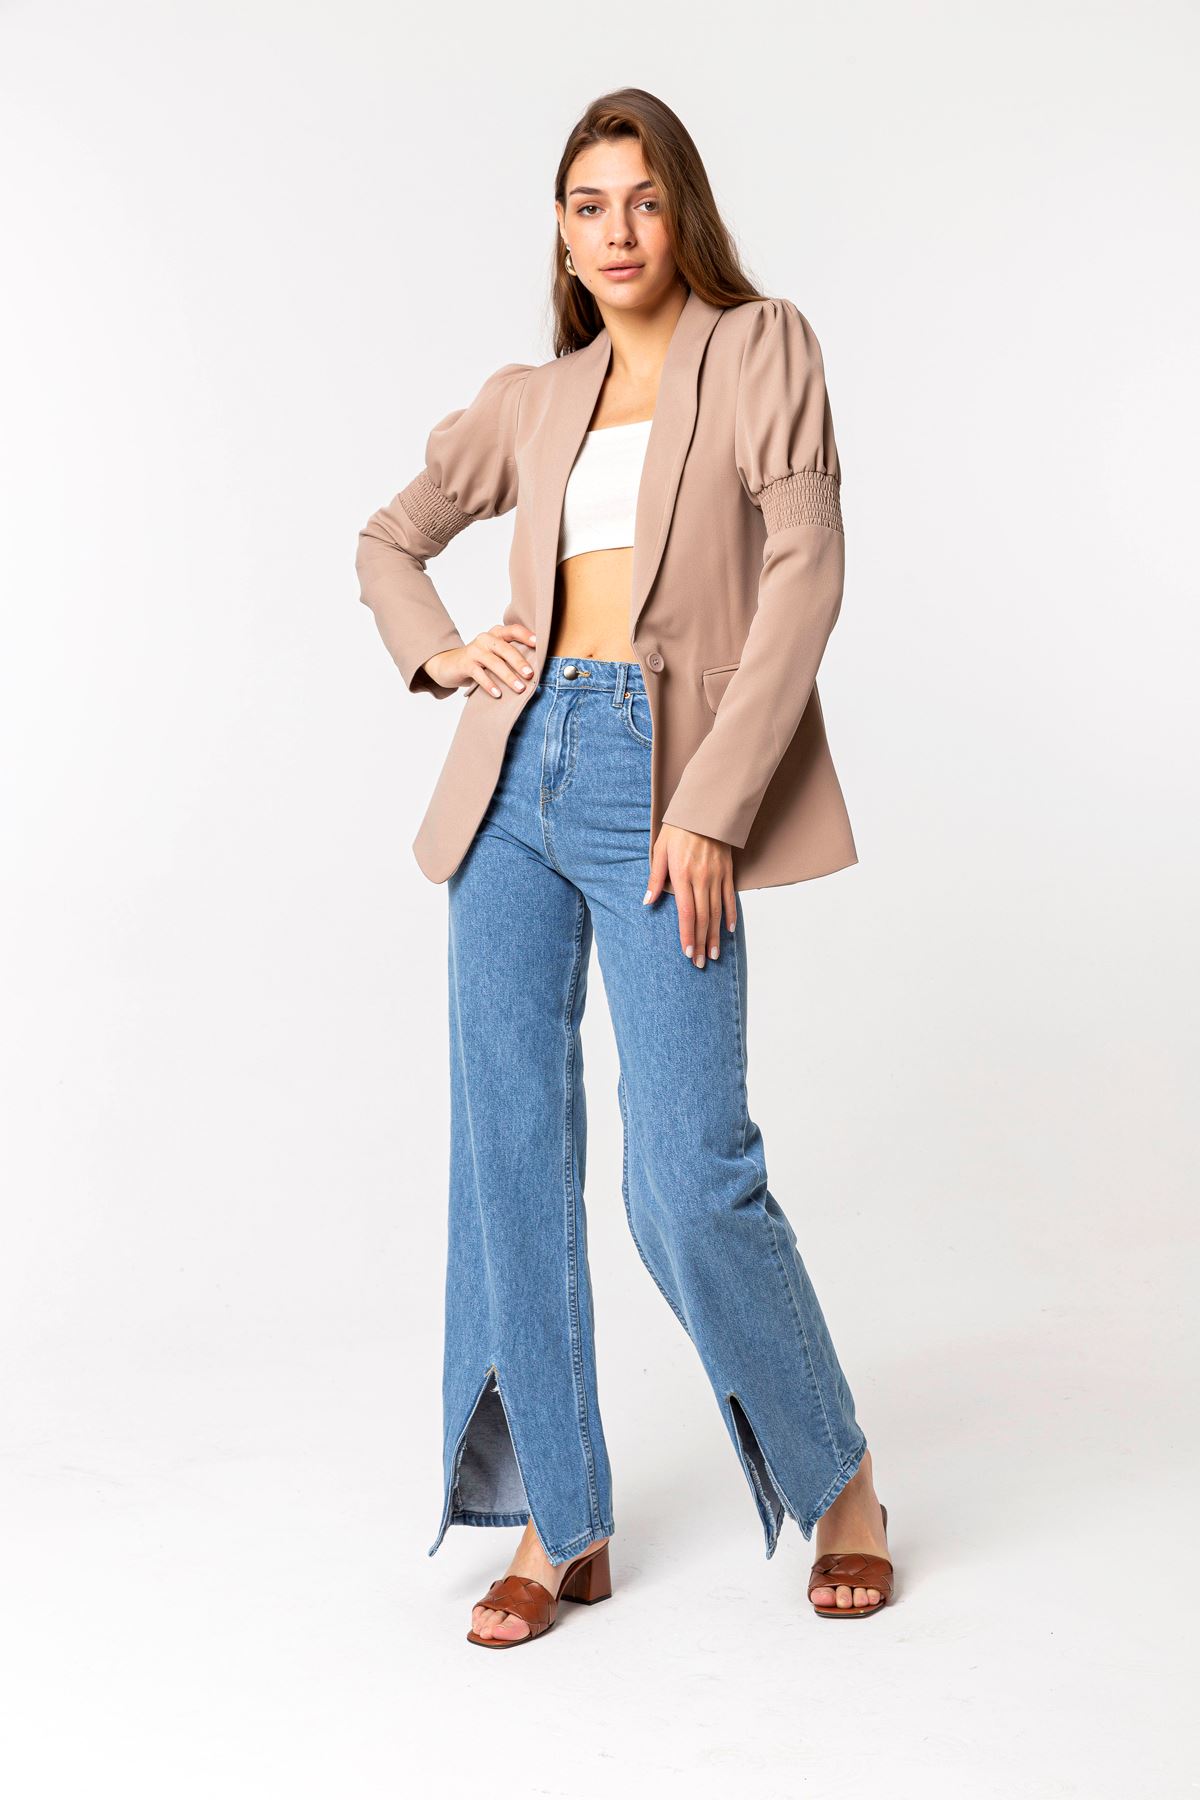 Licra Fabric Long Sleeve Revere Collar Hip Height Classical Women Jacket - Chanterelle 